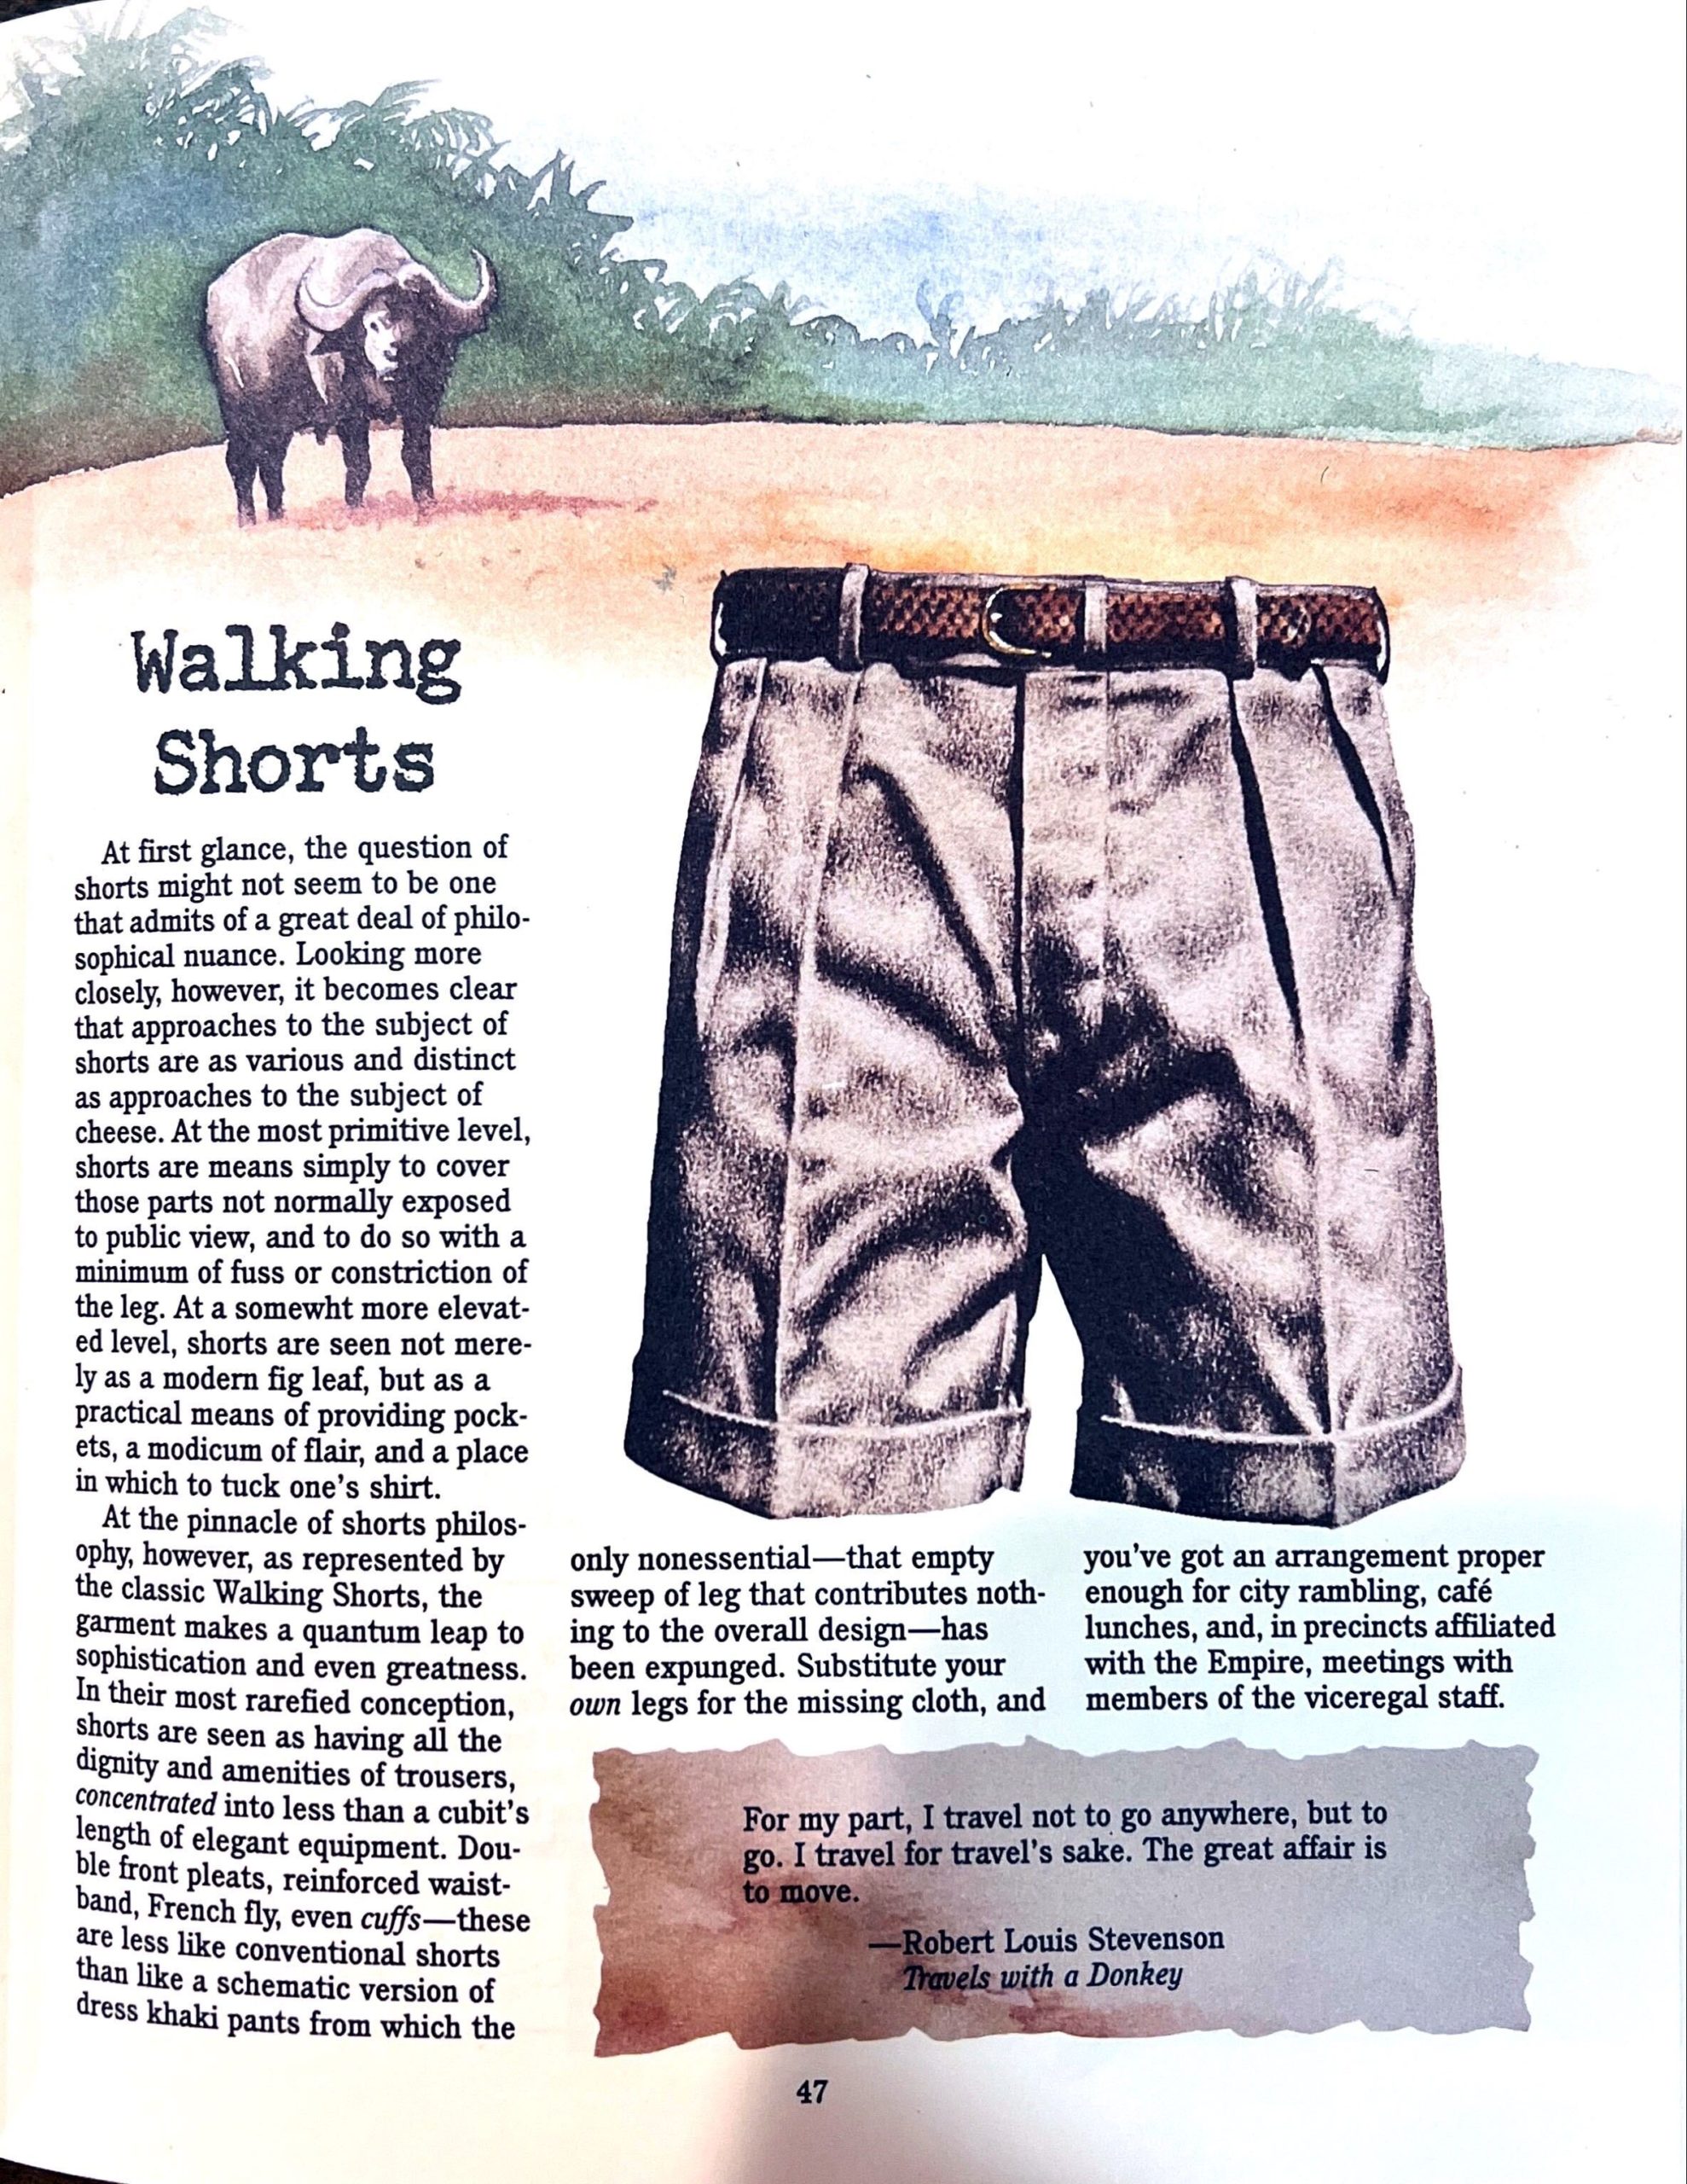 Banana Republic 1986 Catalog, Walking Shorts